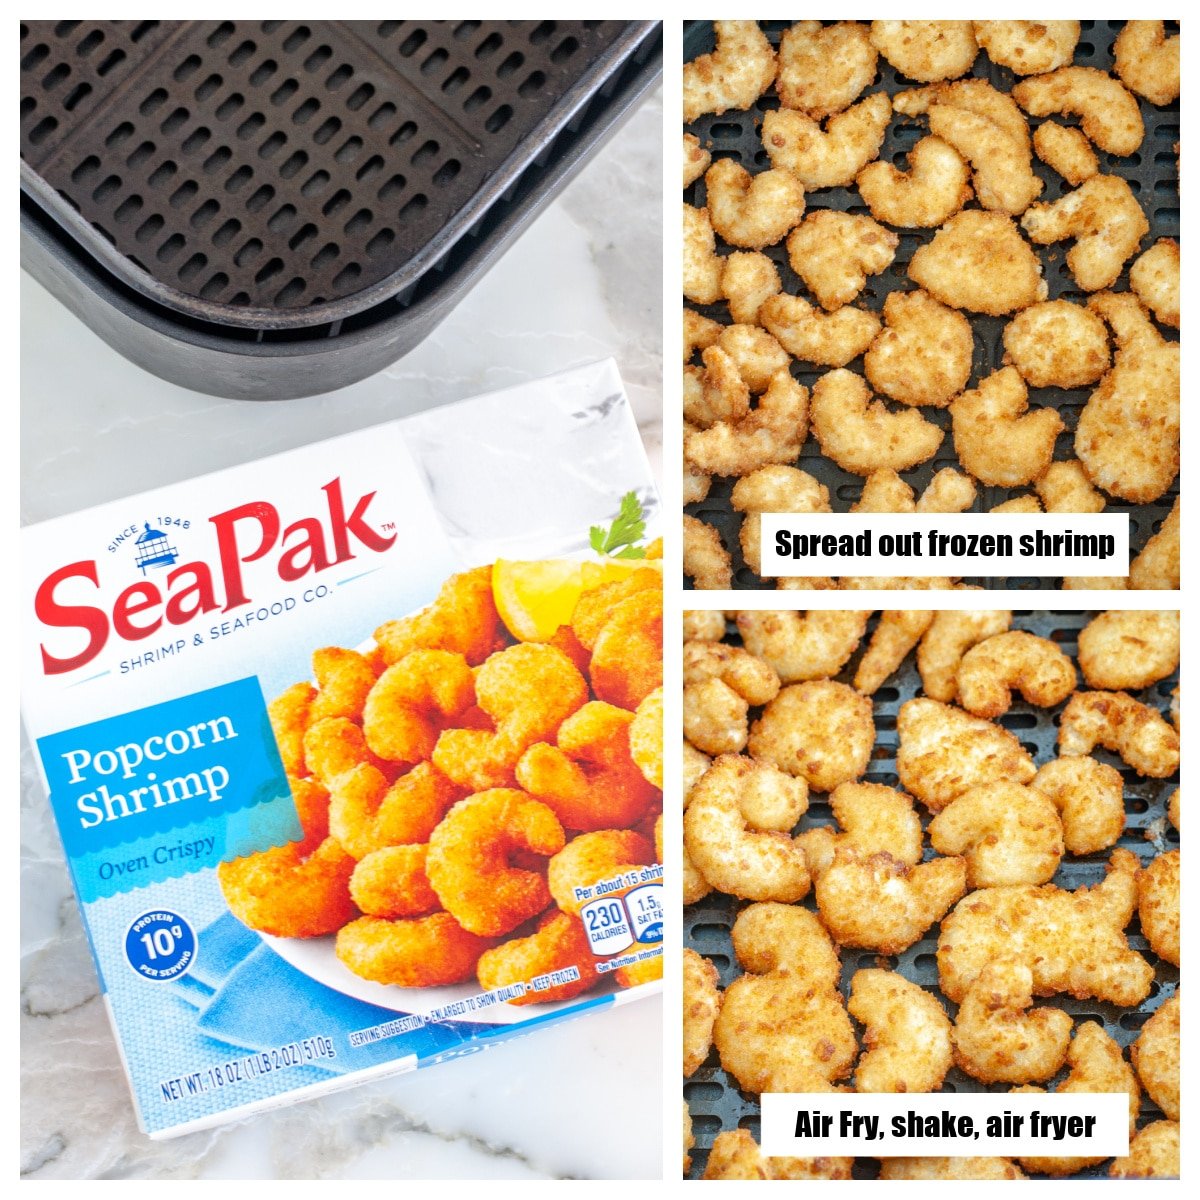 https://www.foodlovinfamily.com/wp-content/uploads/2021/02/air-fryer-frozen-popcorn-shrimp-ingredients.jpg